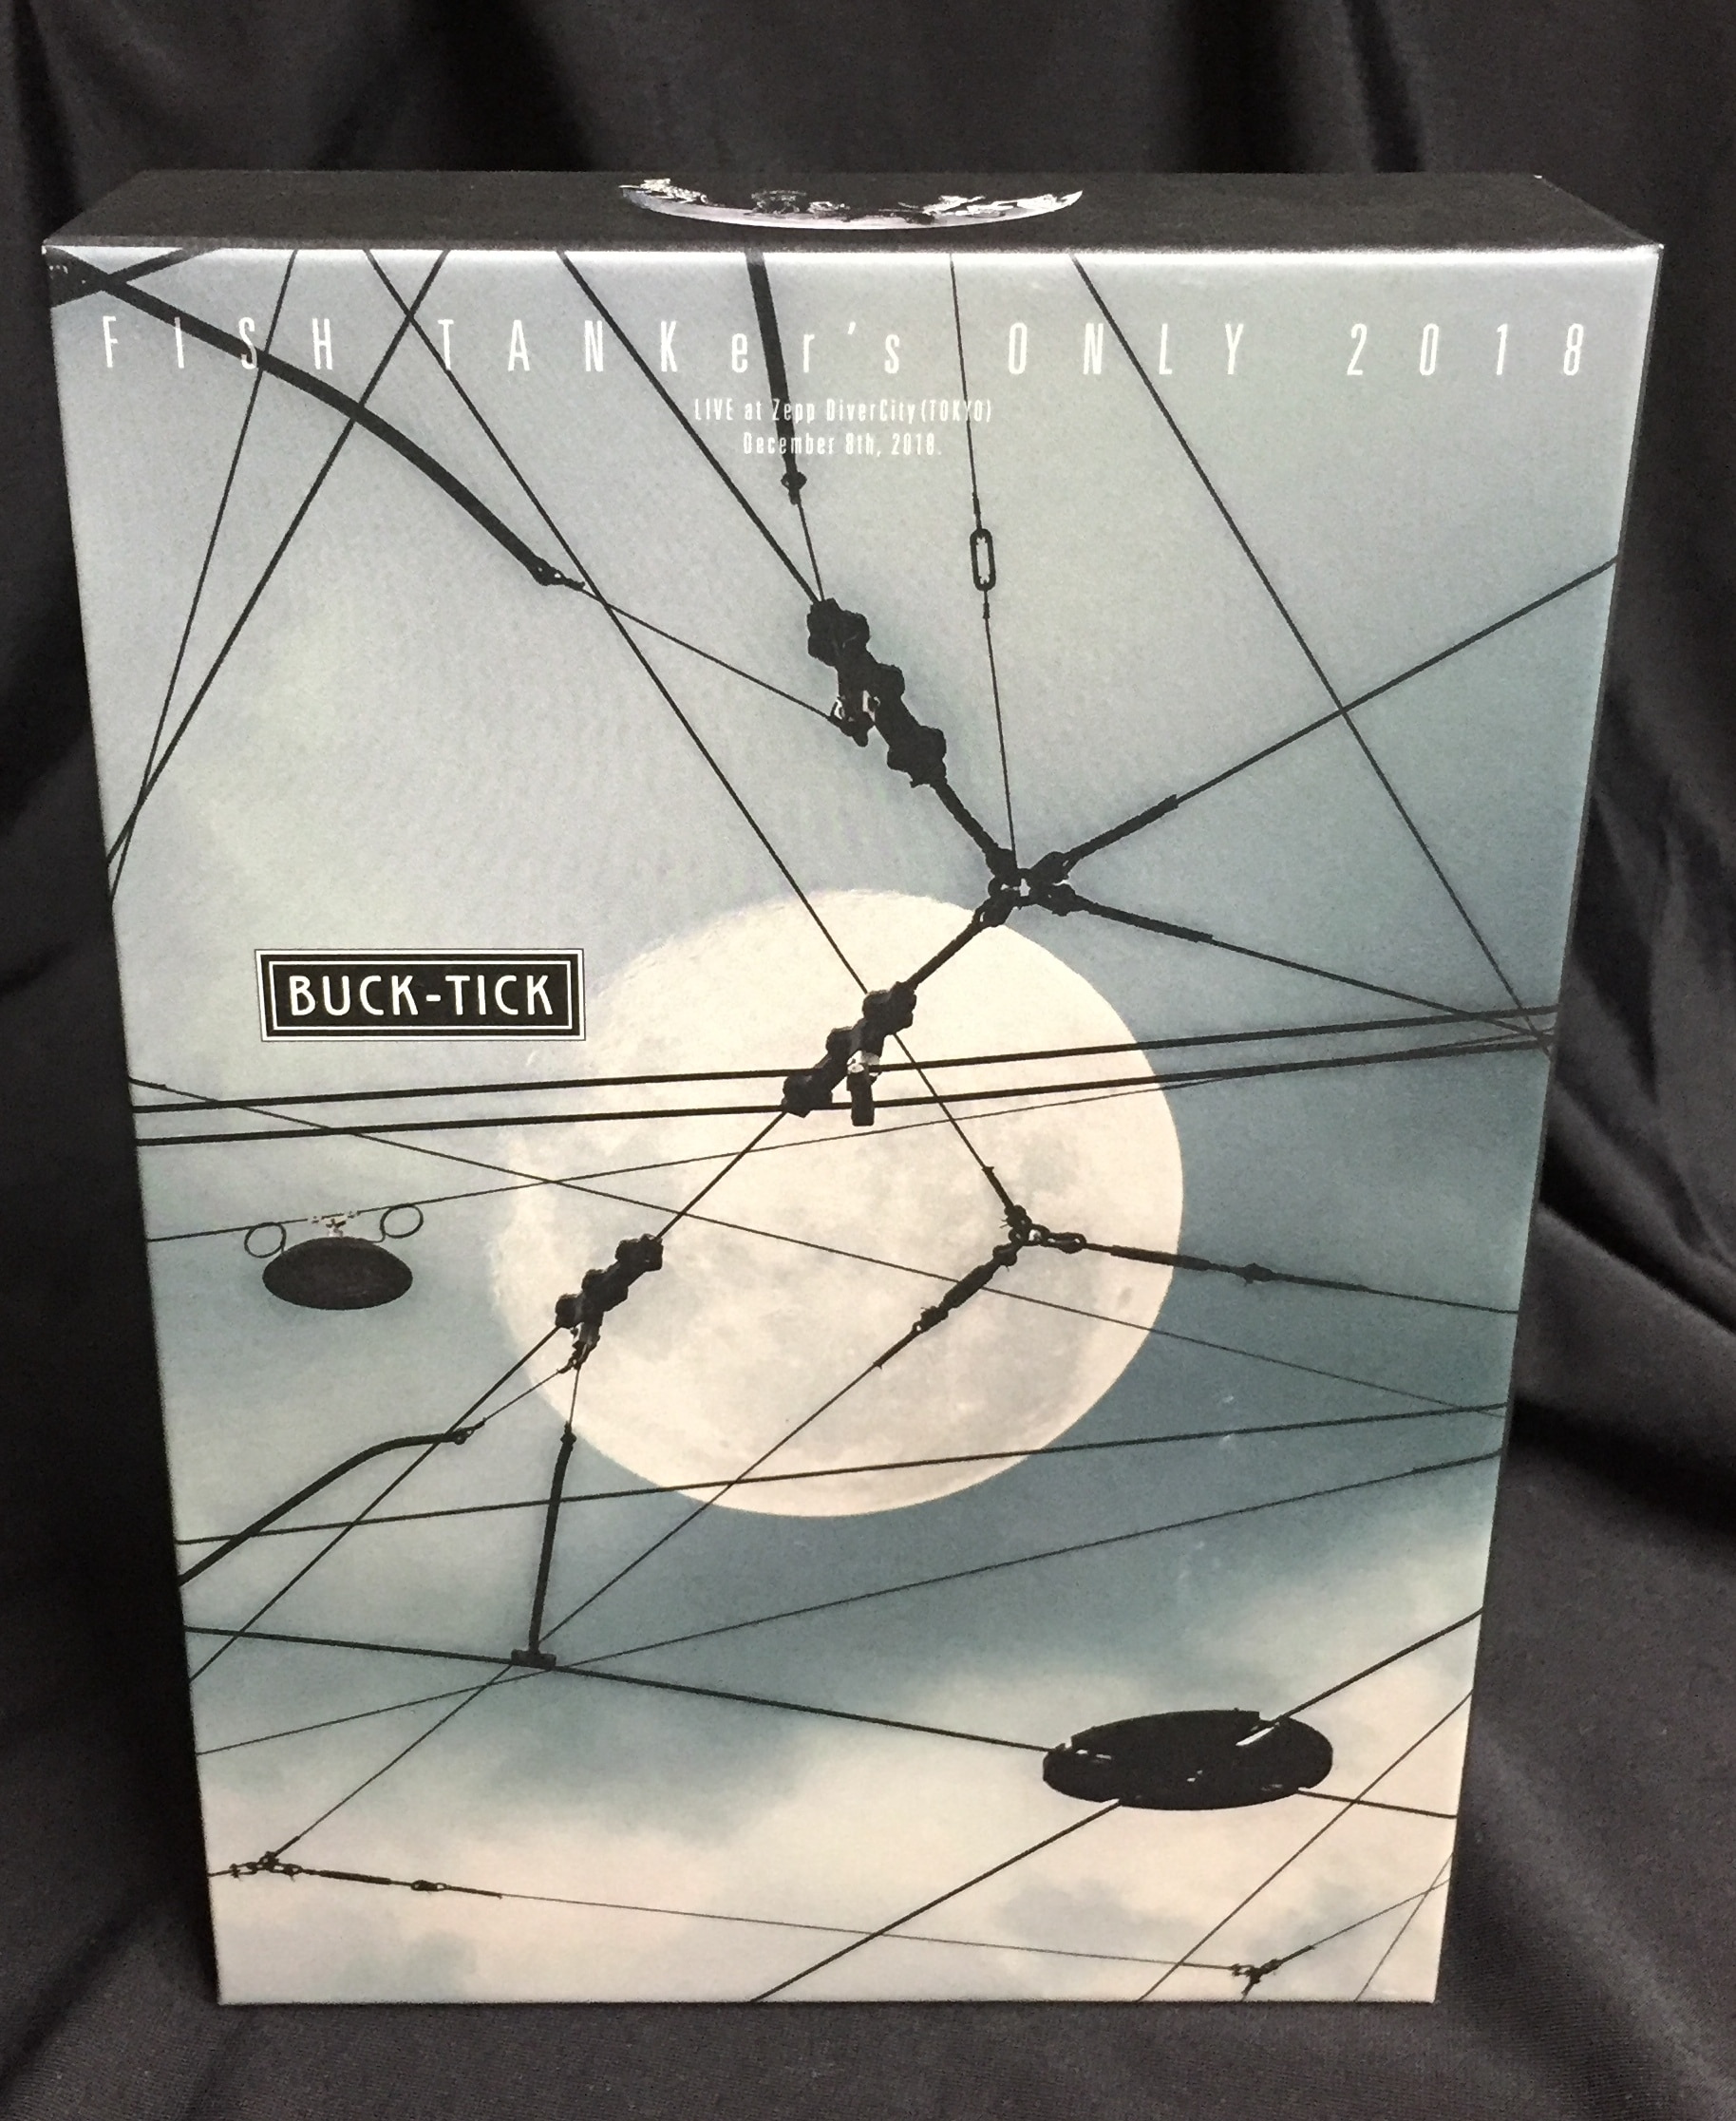 BUCK-TICK 完全予約限定盤(2Blu-ray+2CD) FISH TANKer's ONLY 2018 ...